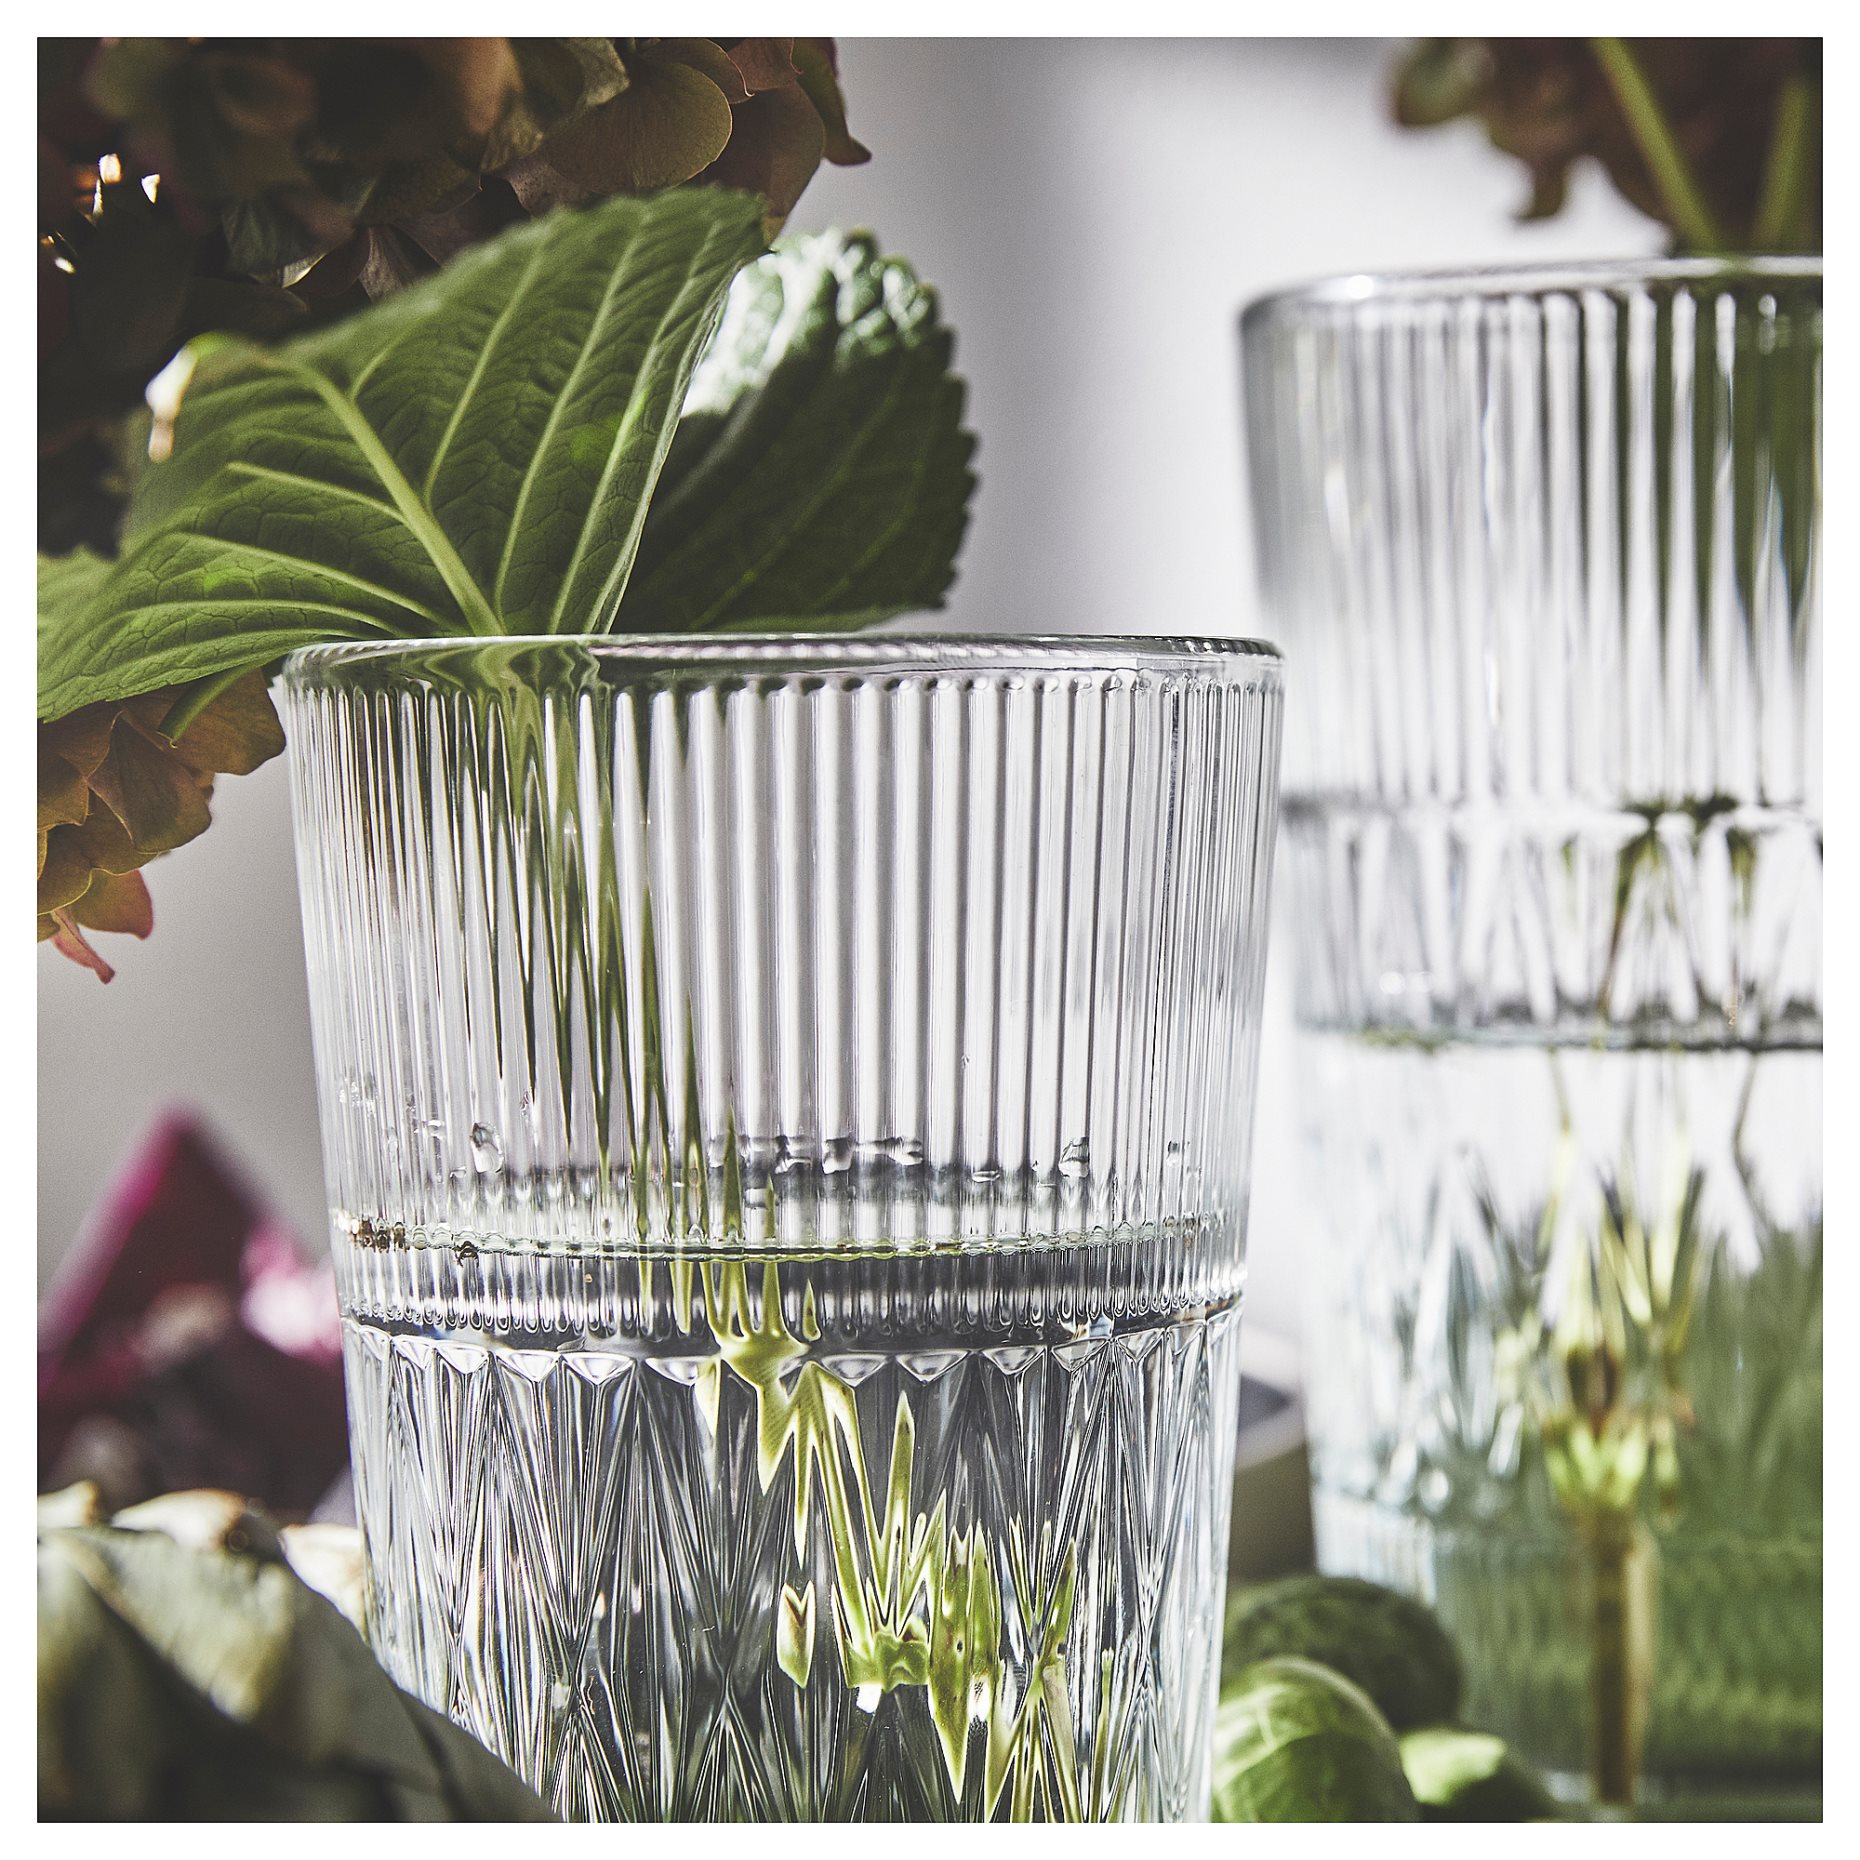 SMÄLLSPIREA, vase/glass/patterned, 22 cm, 205.421.72